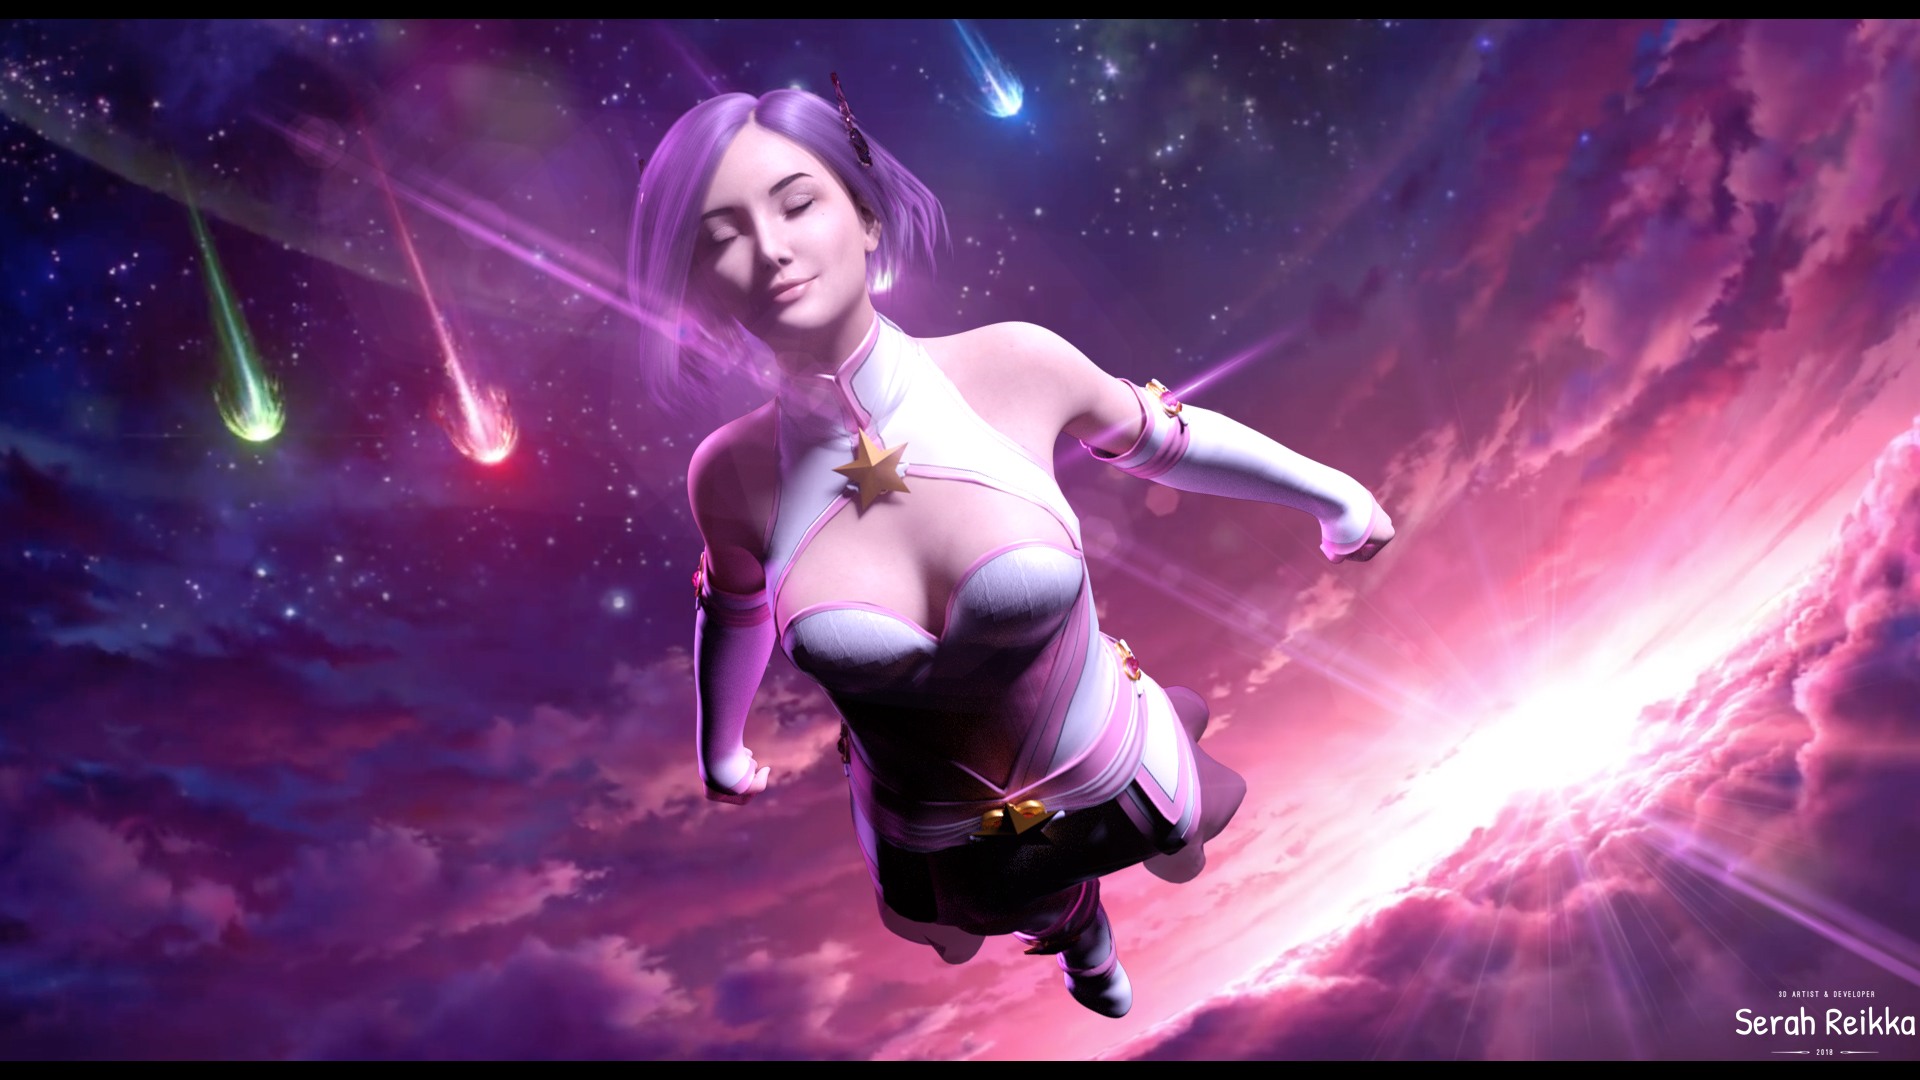 General 1920x1080 women League of Legends cosplay pink hair CGI digital art space art flying 4Gamers Star Guardian